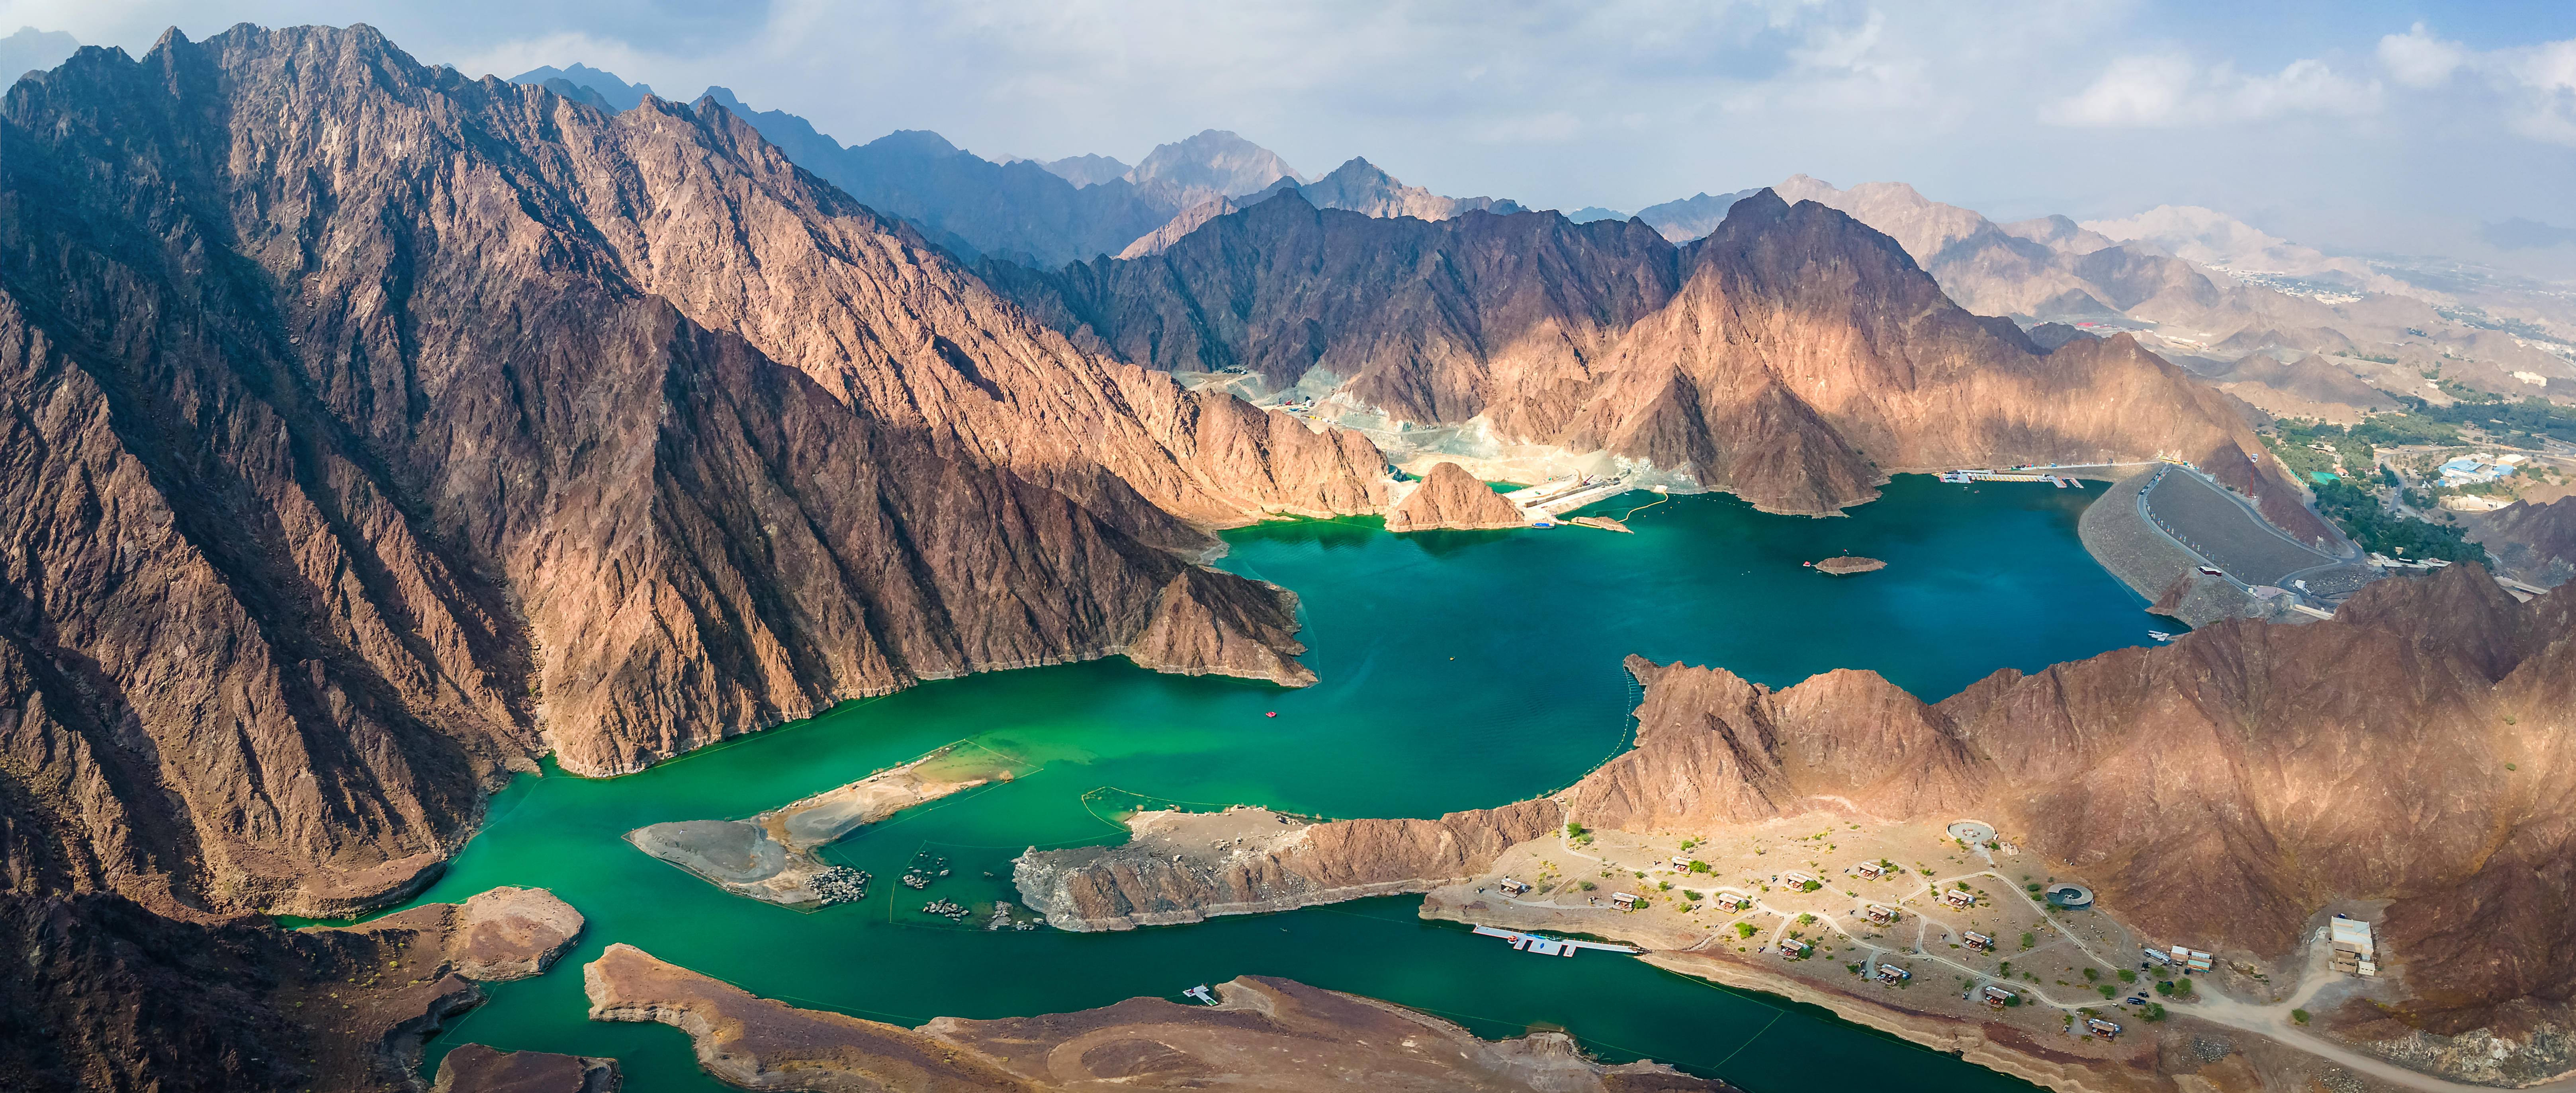 Hatta Dam, Dubai: How To Reach, Best Time & Tips